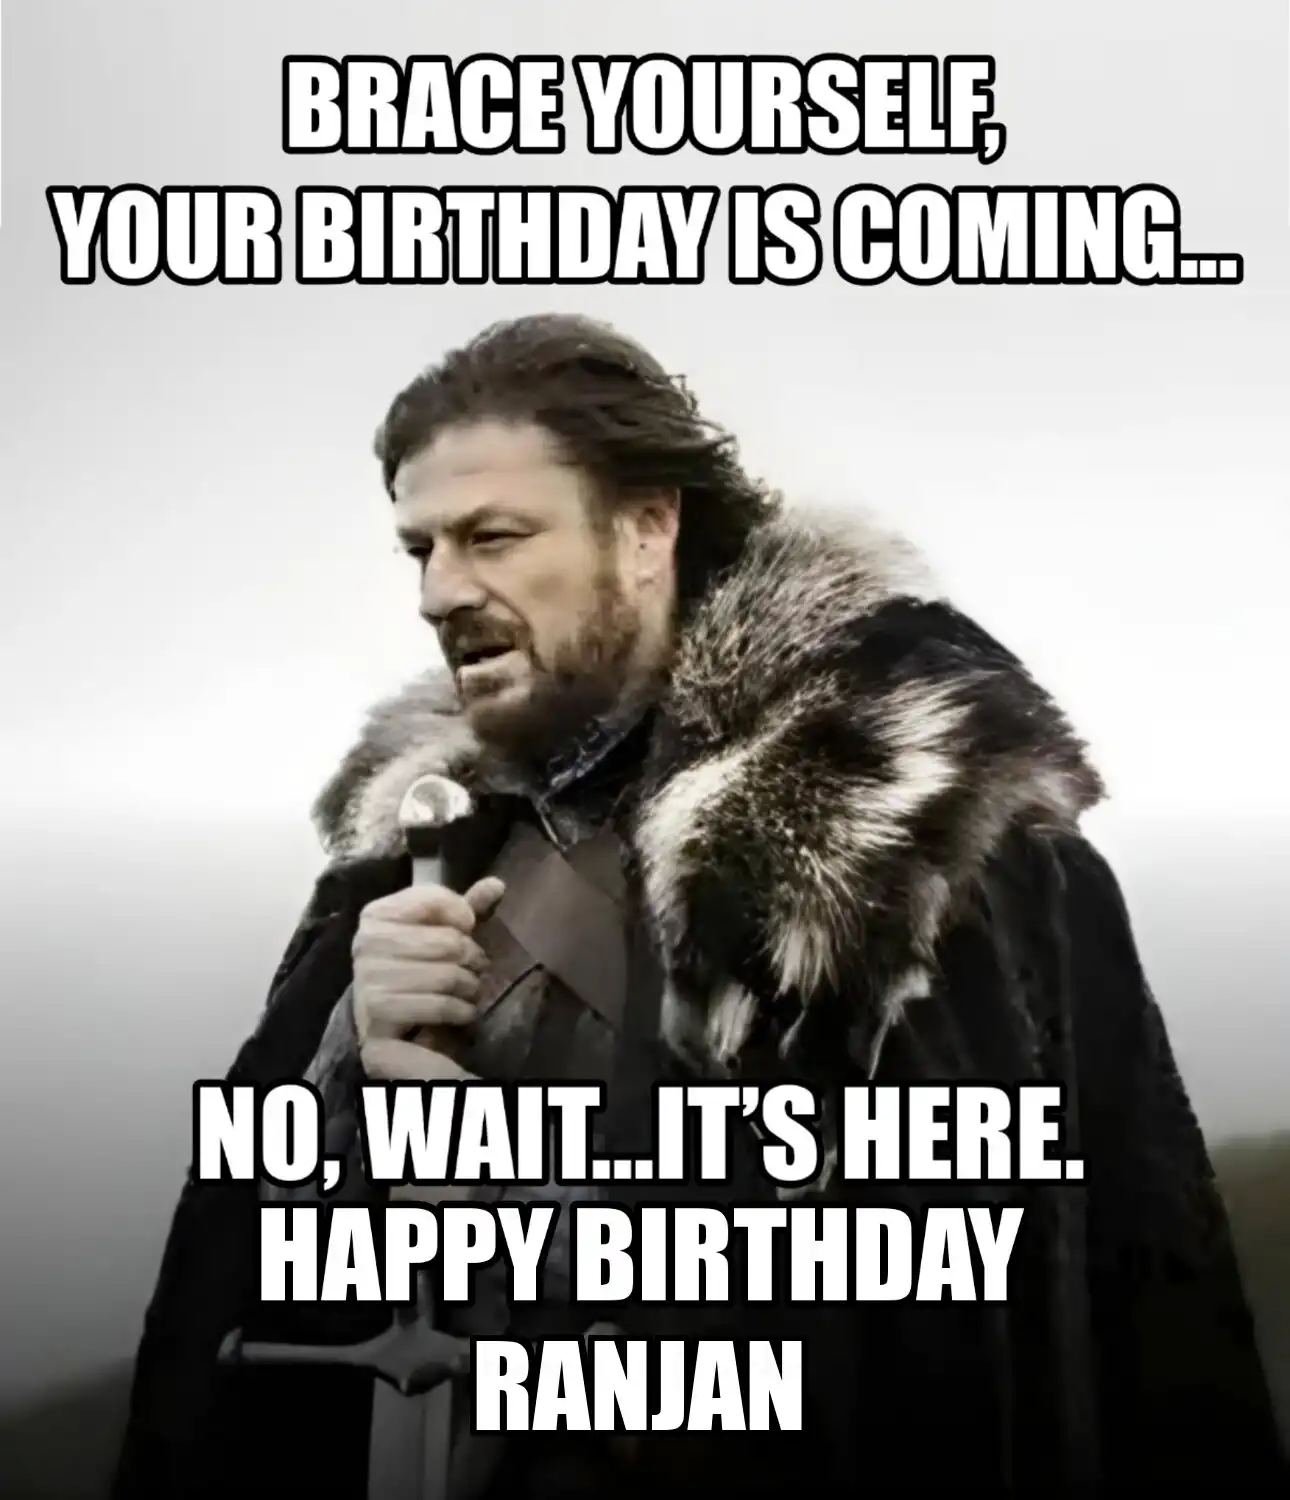 Happy Birthday Ranjan Brace Yourself Your Birthday Is Coming Meme